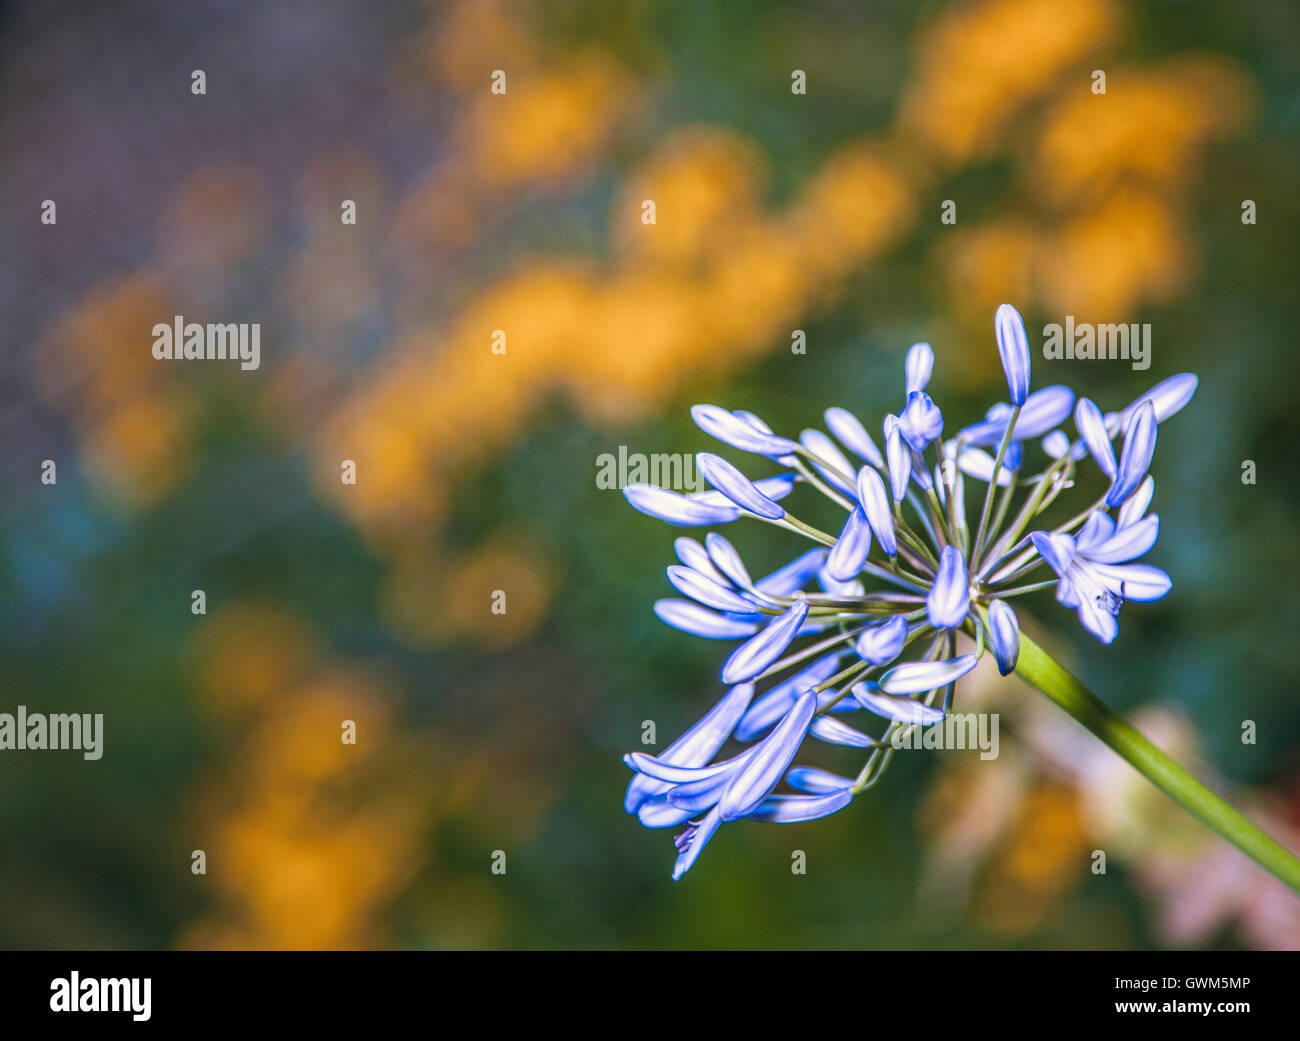 Close up of a beautiful blue Alium flower Stock Photo